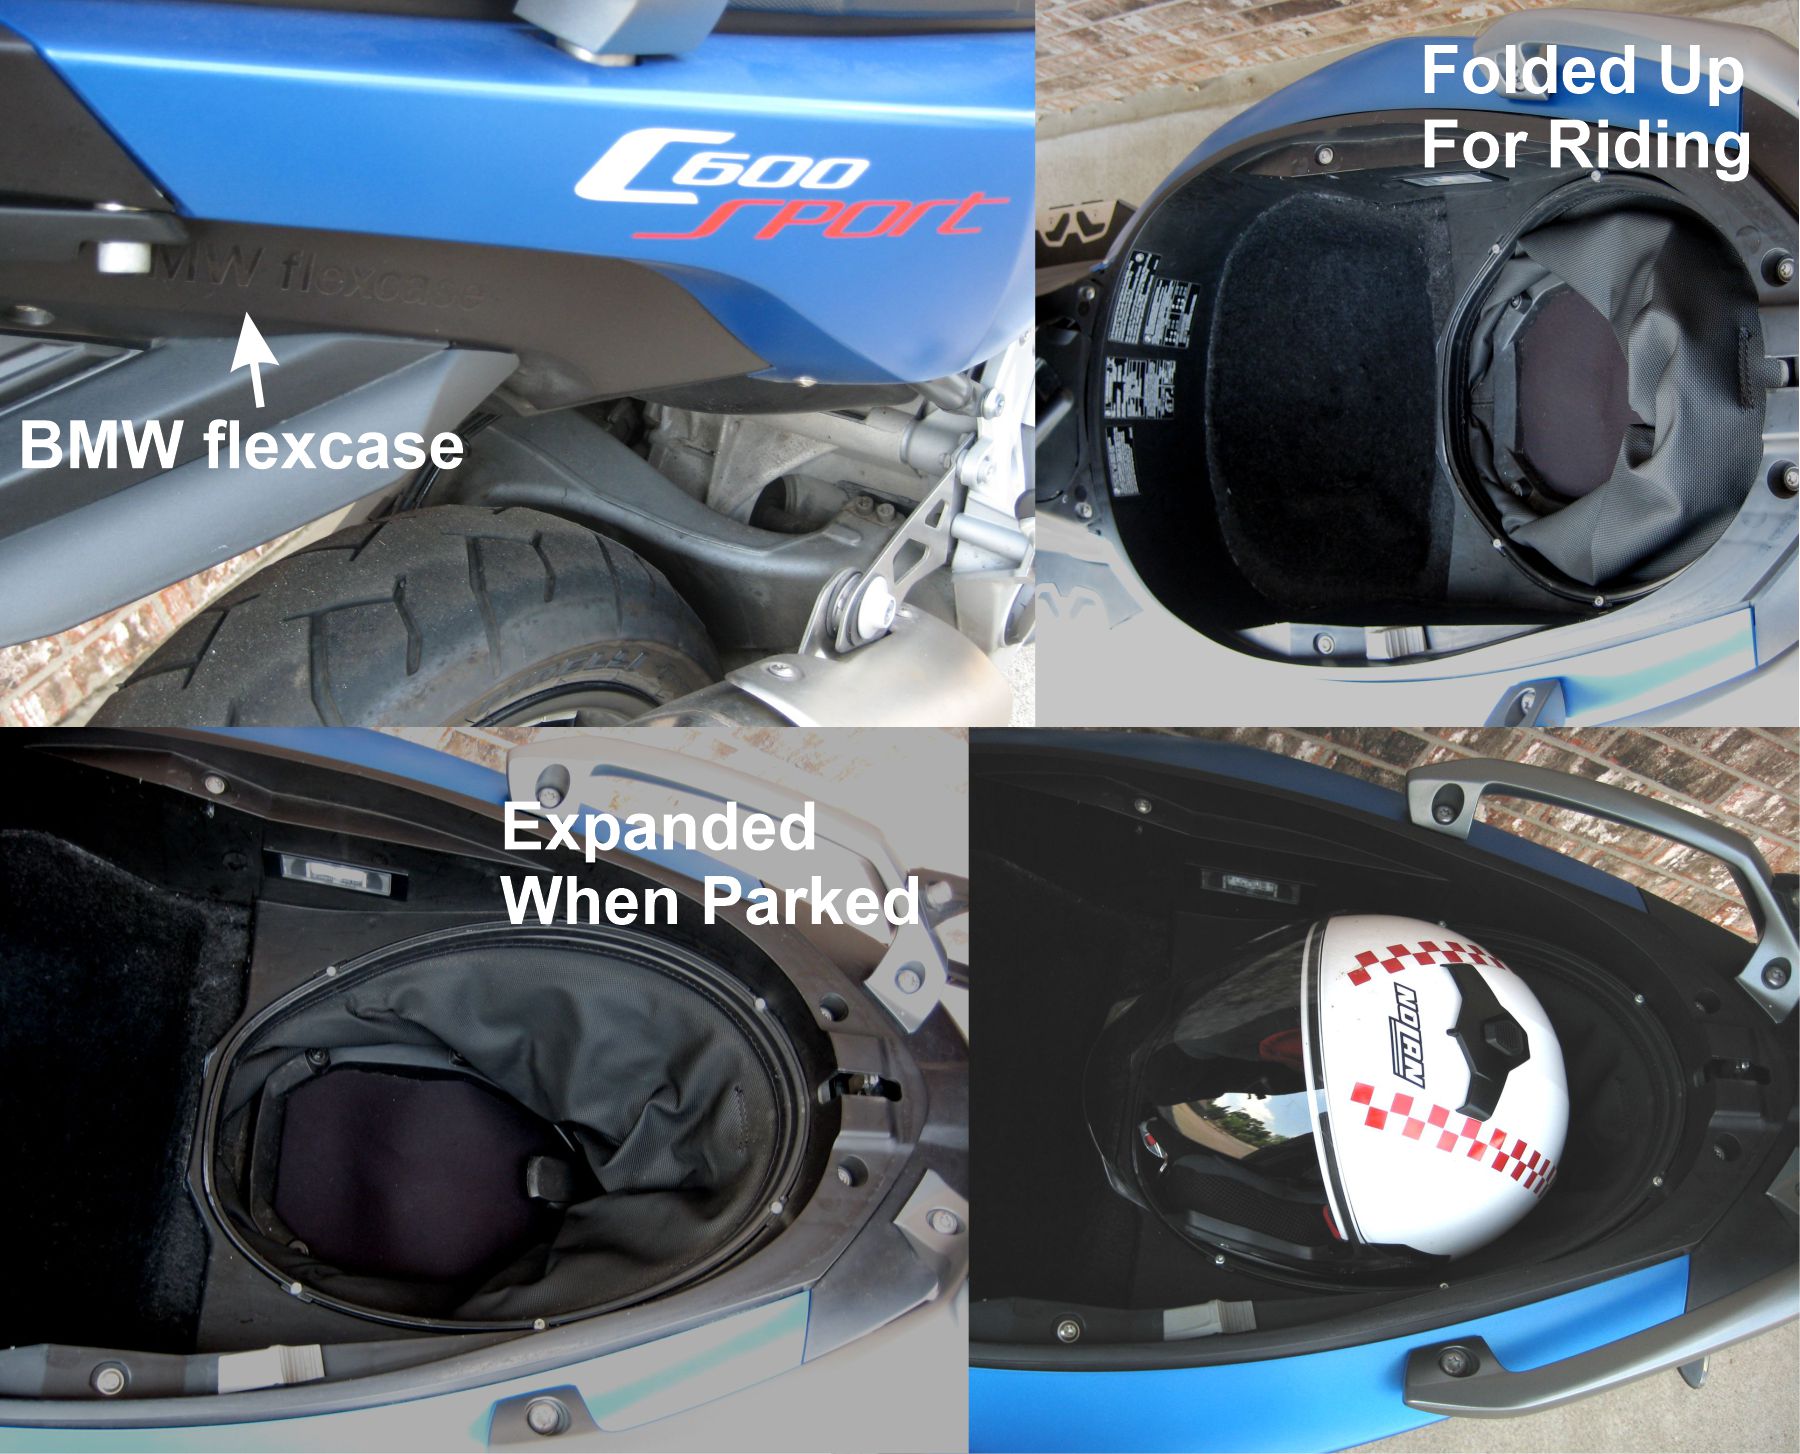 Various photos of the flexcase configuration for storage